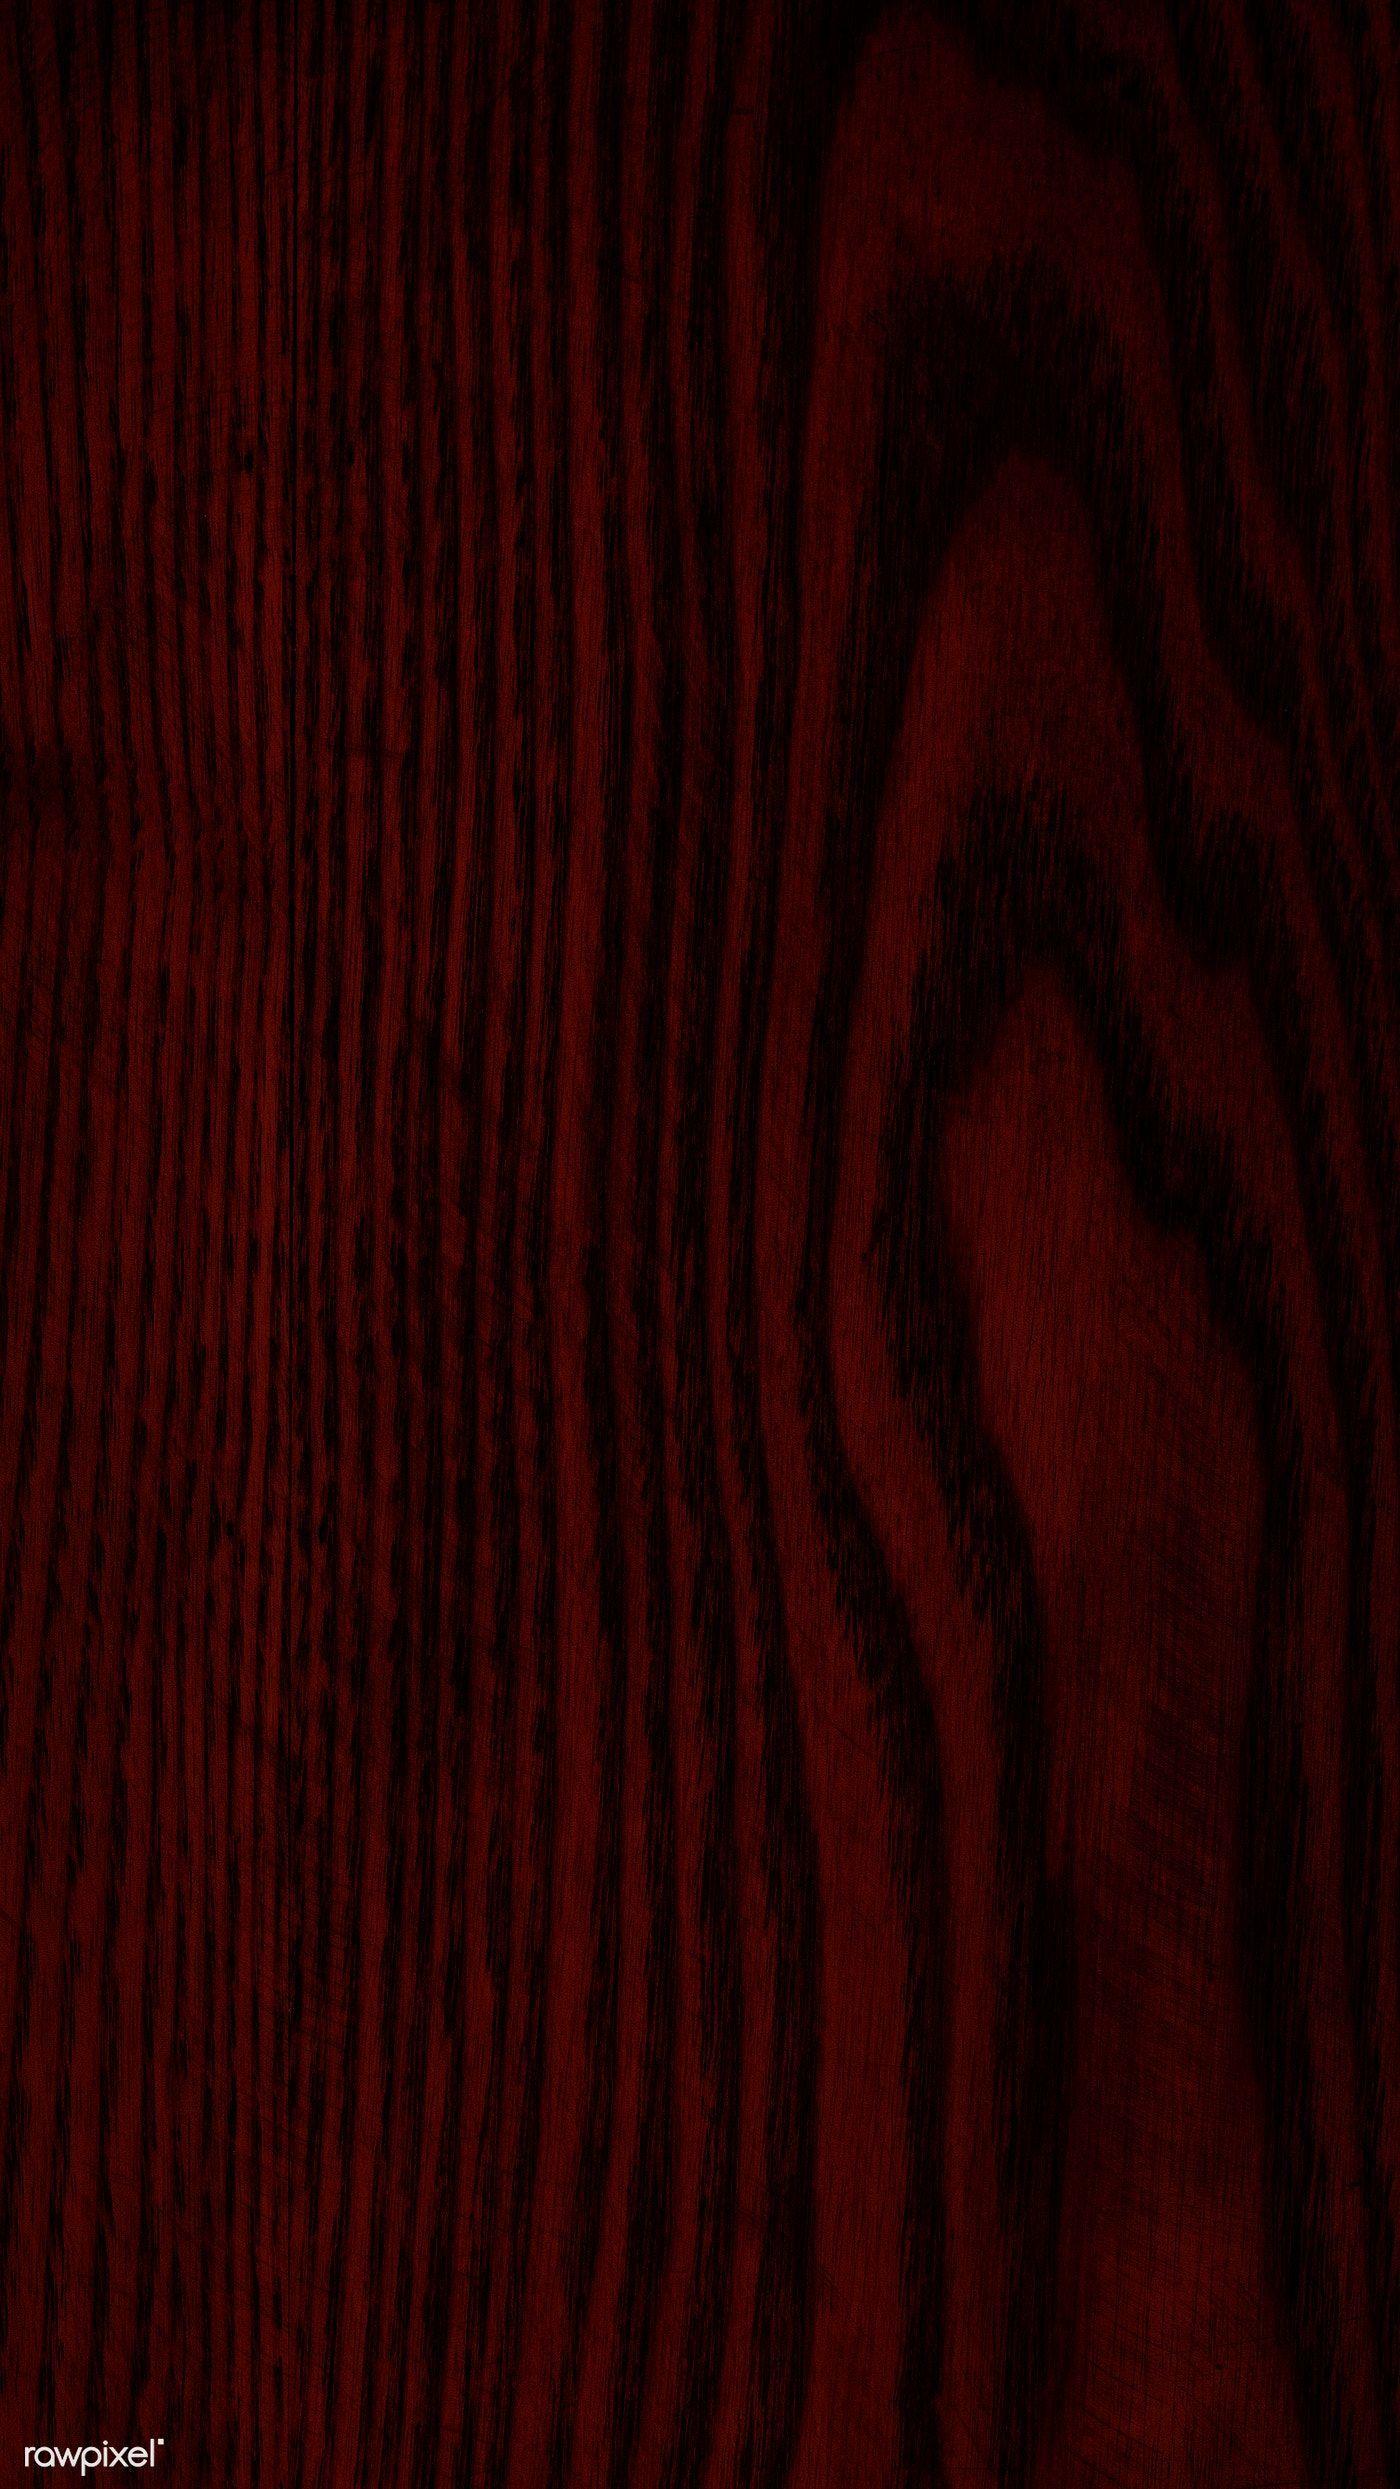 997227 Red Wood Texture Images Stock Photos  Vectors  Shutterstock